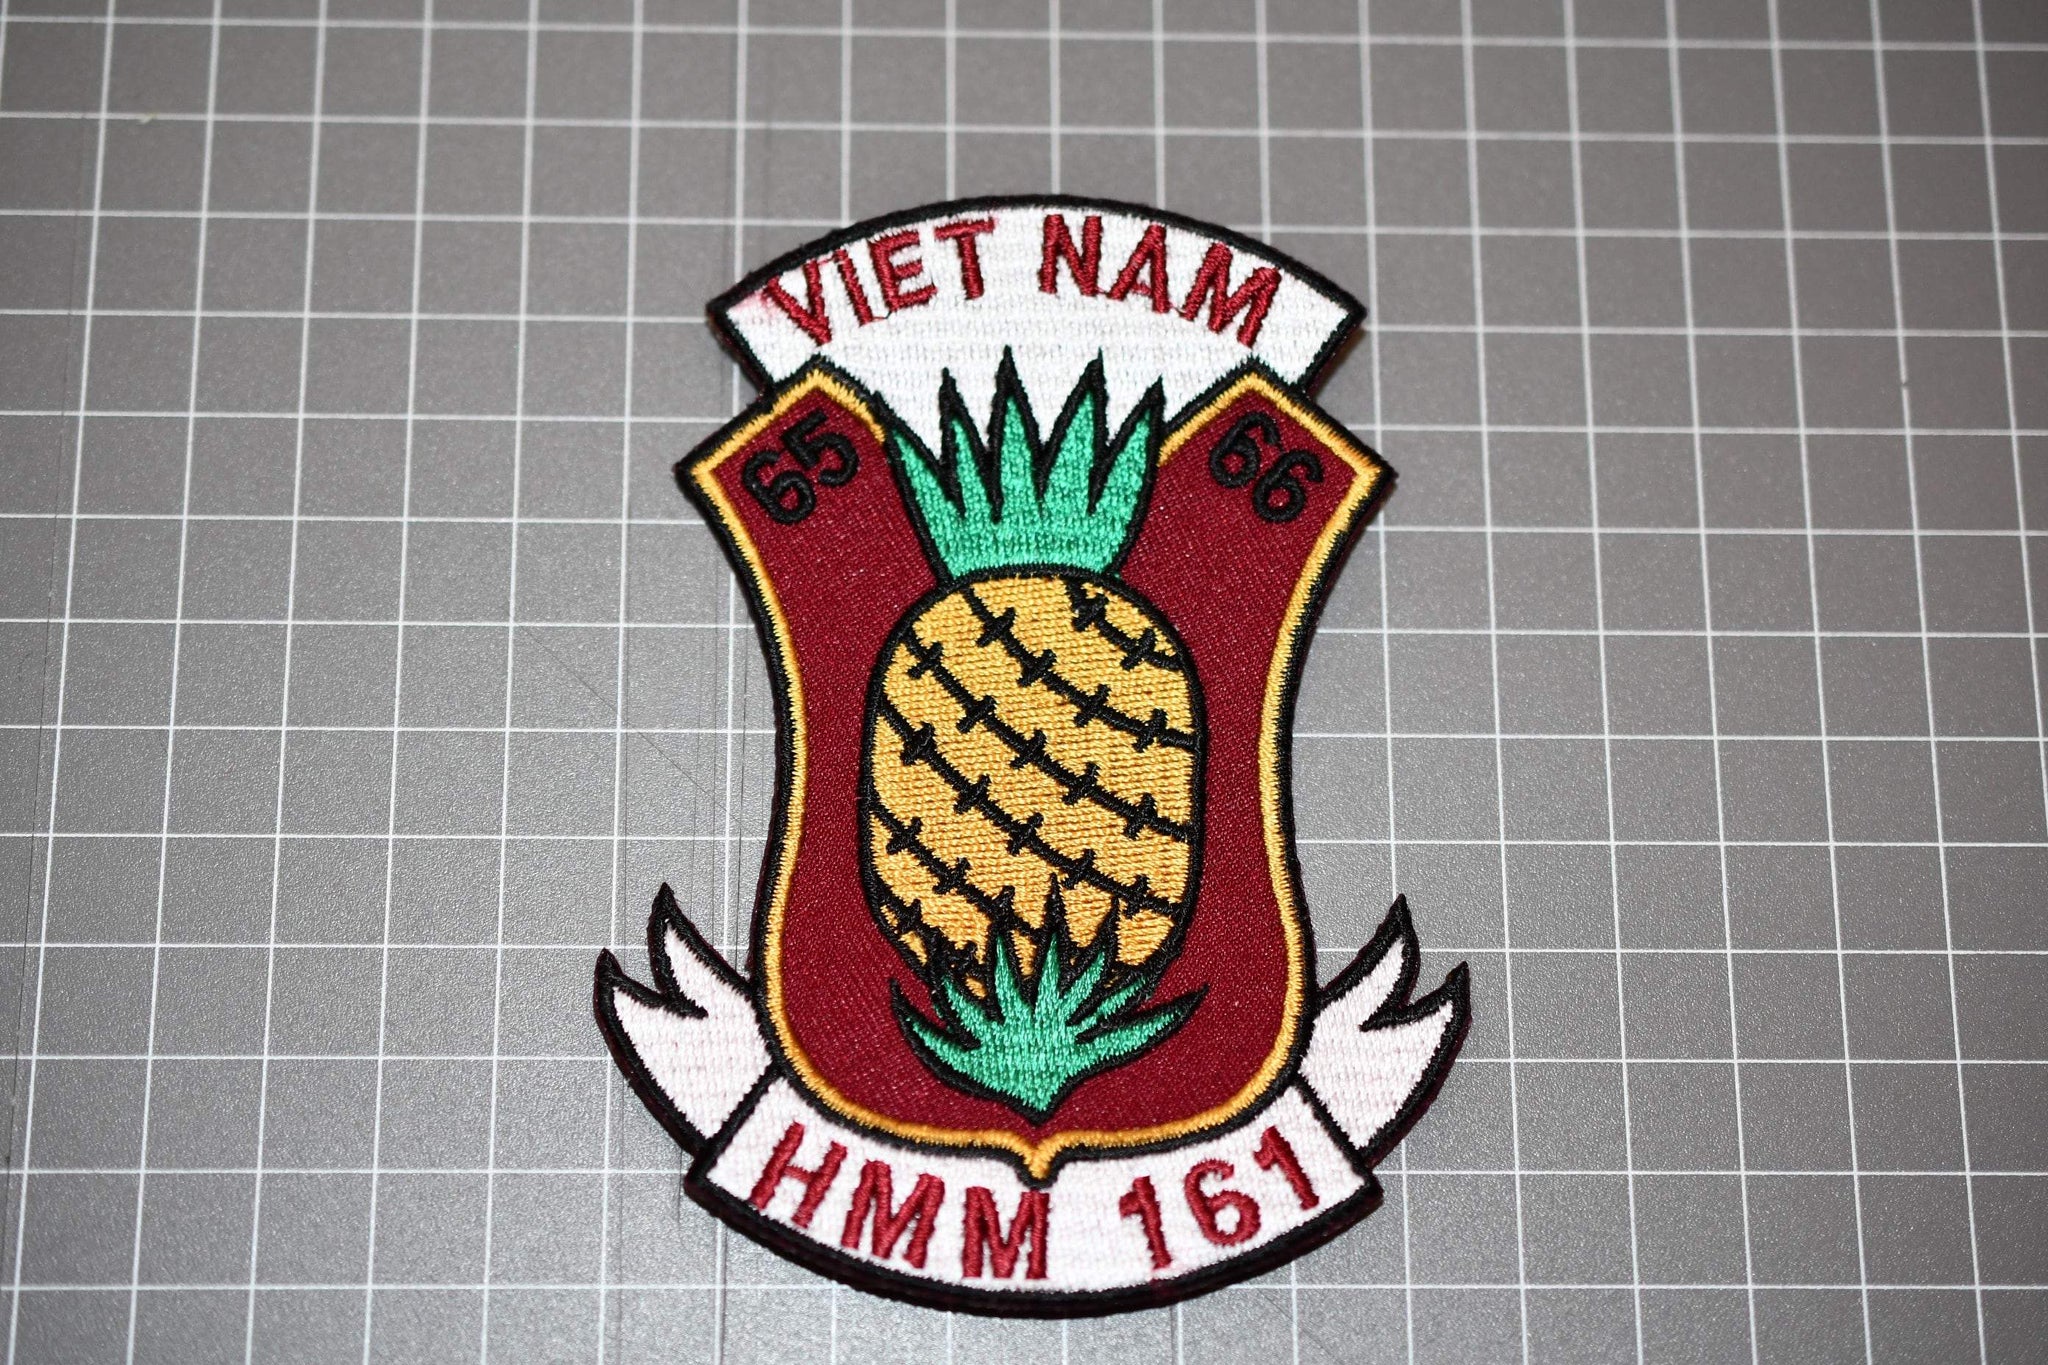 USMC HMM 151 Helicopter Squadron Vietnam Patch (B10-041)